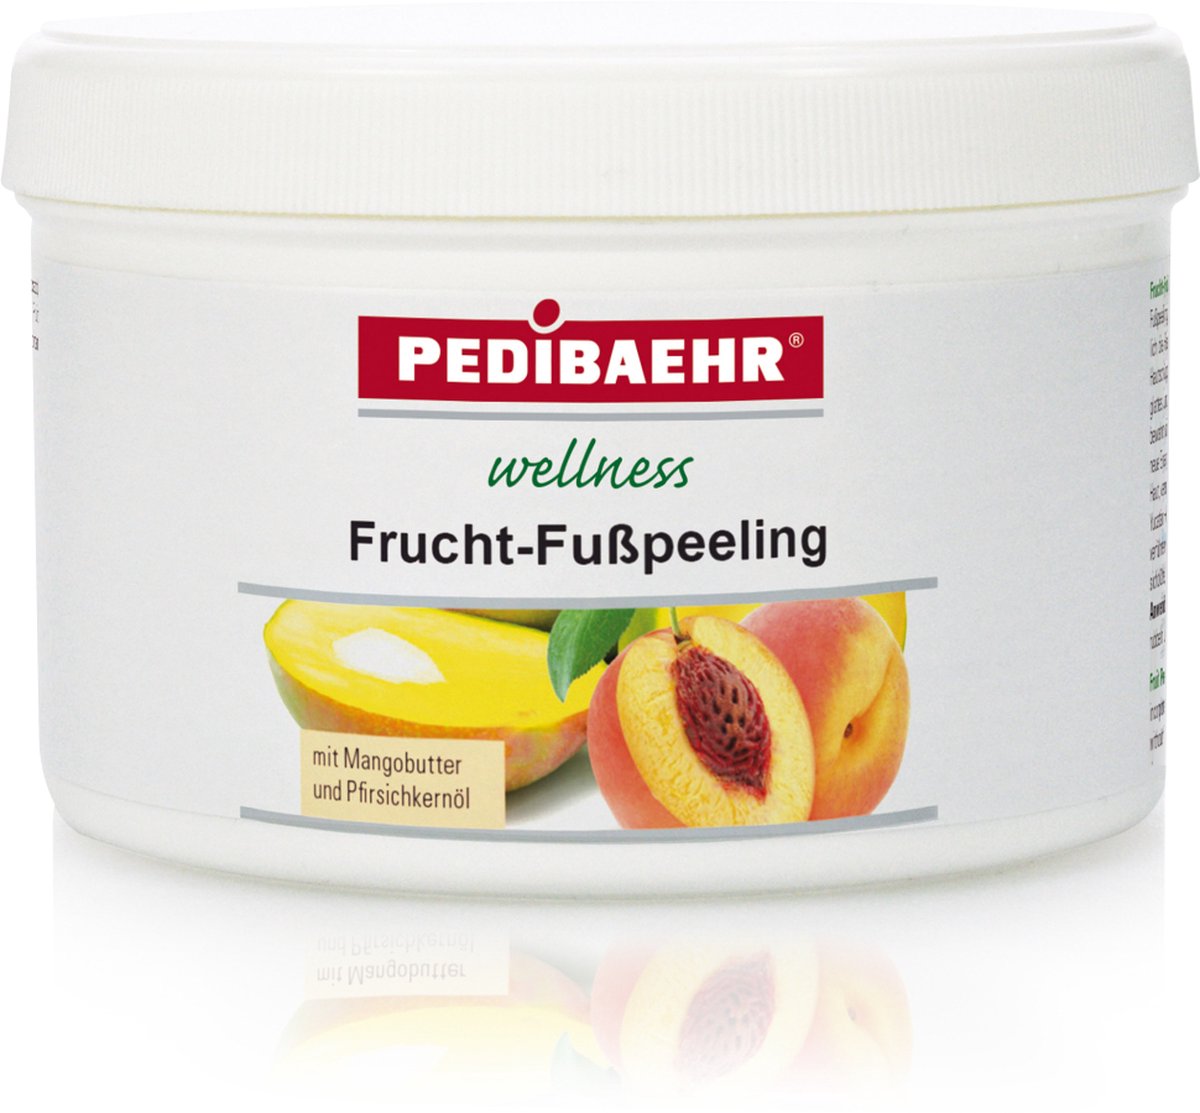 PEDIBAEHR - Voetpeeling - Mango-Perzik - 10973 - 450 ml - Wellness - Vegan - Scrub -